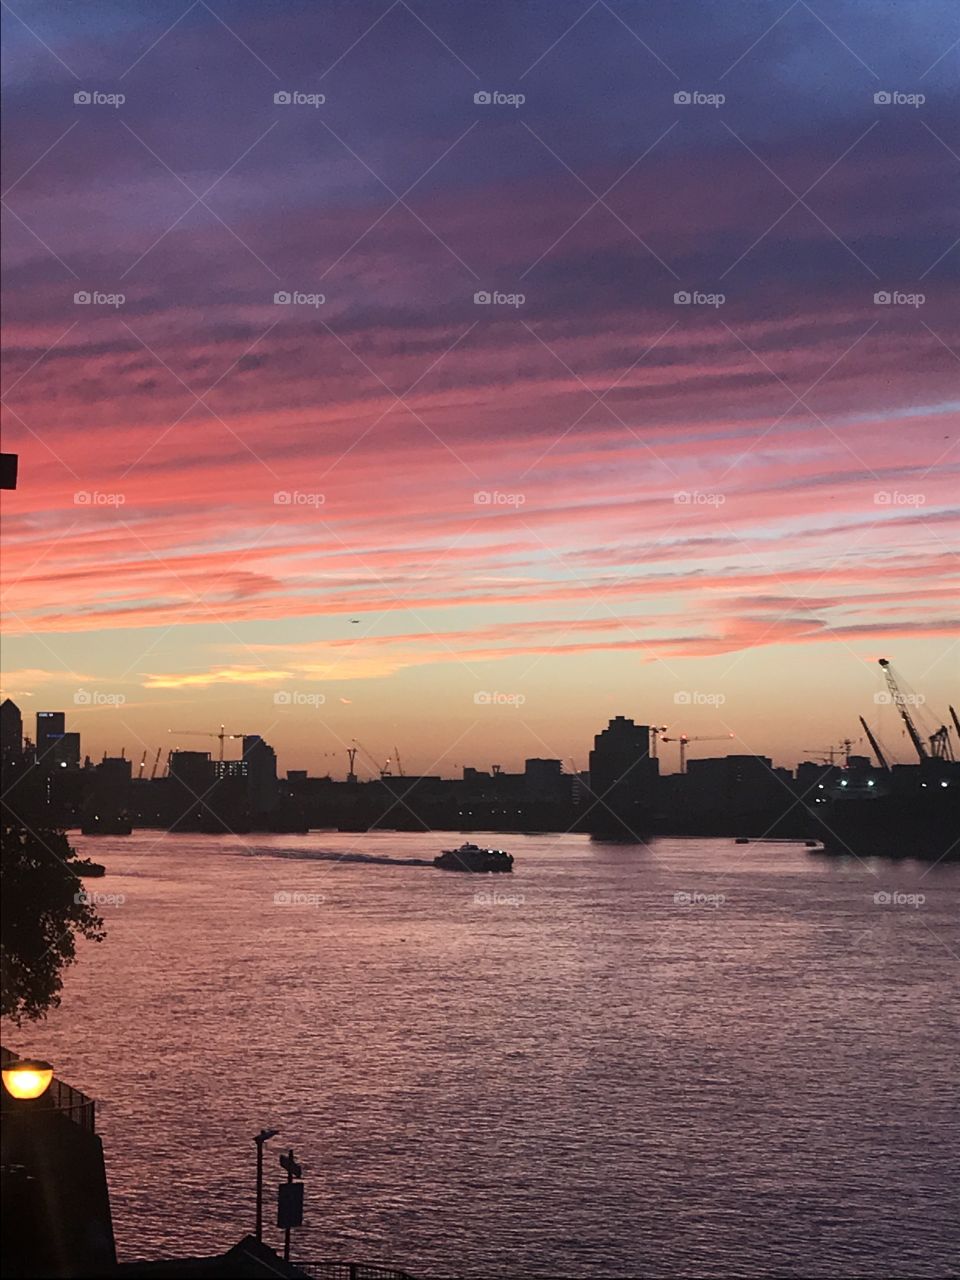 Beautiful sunset tonight over London 